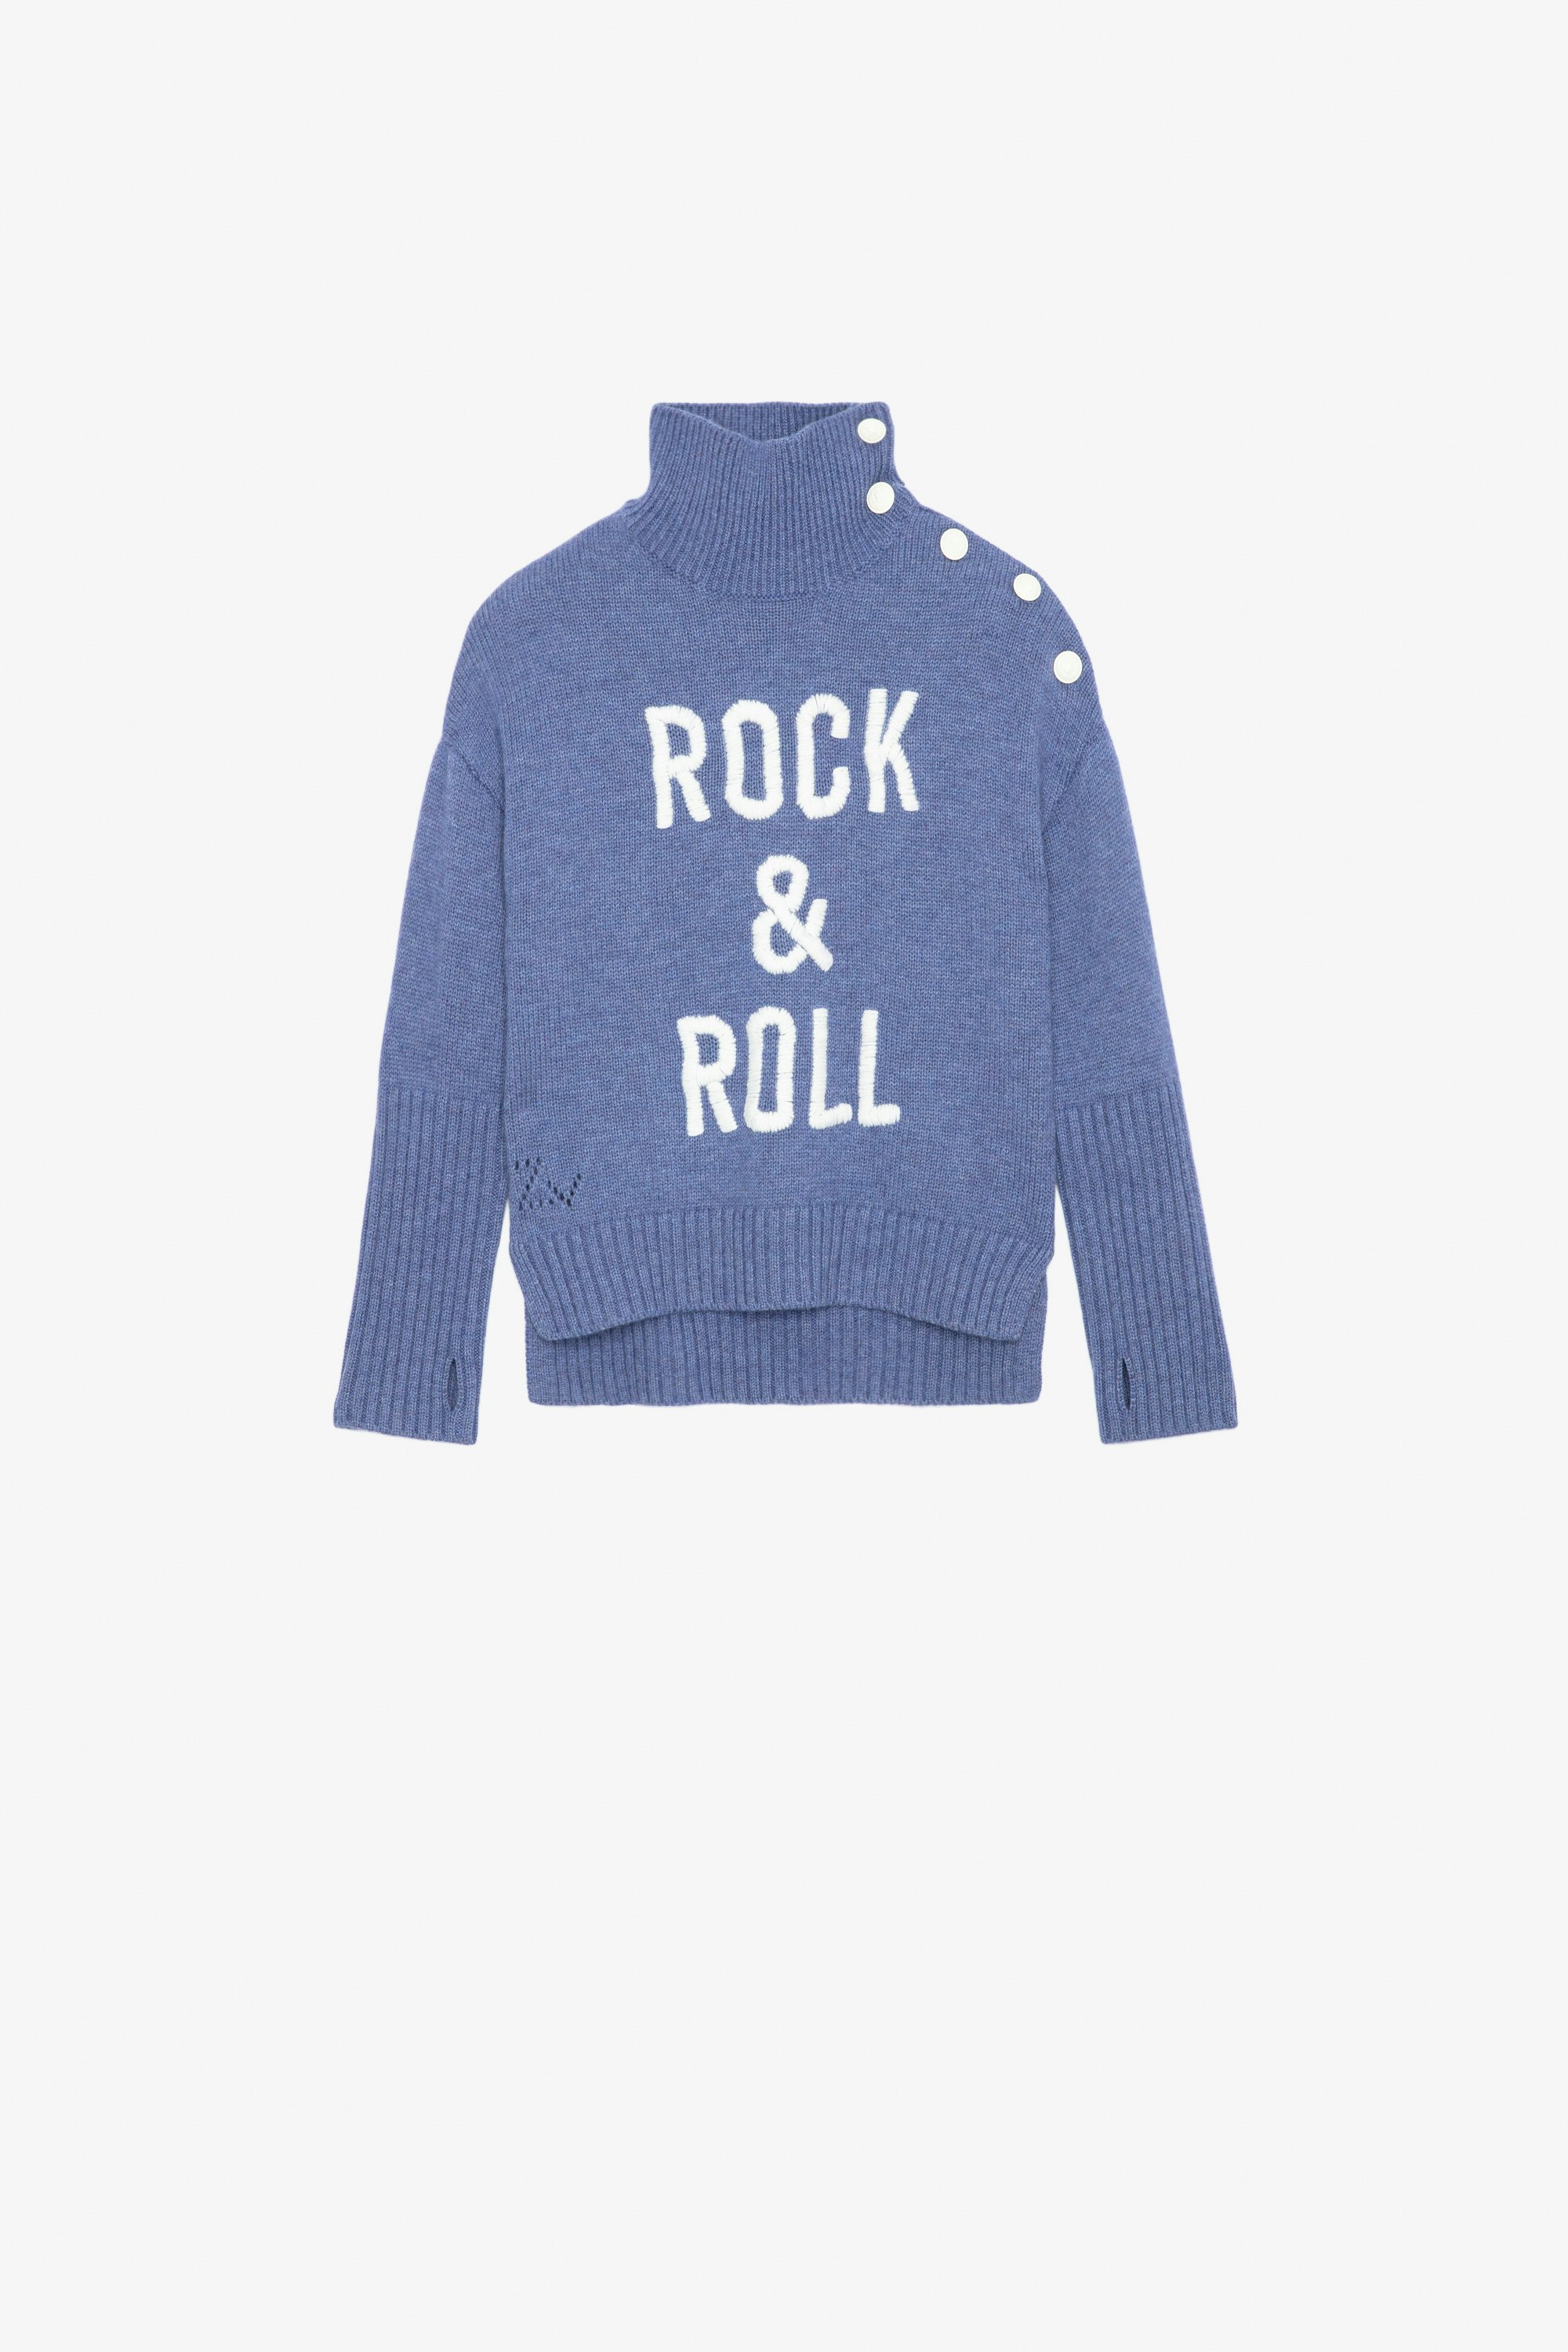 Alma Girls’ Sweater - Girls’ purple knit turtleneck sweater with “Rock & Roll” embroidery.